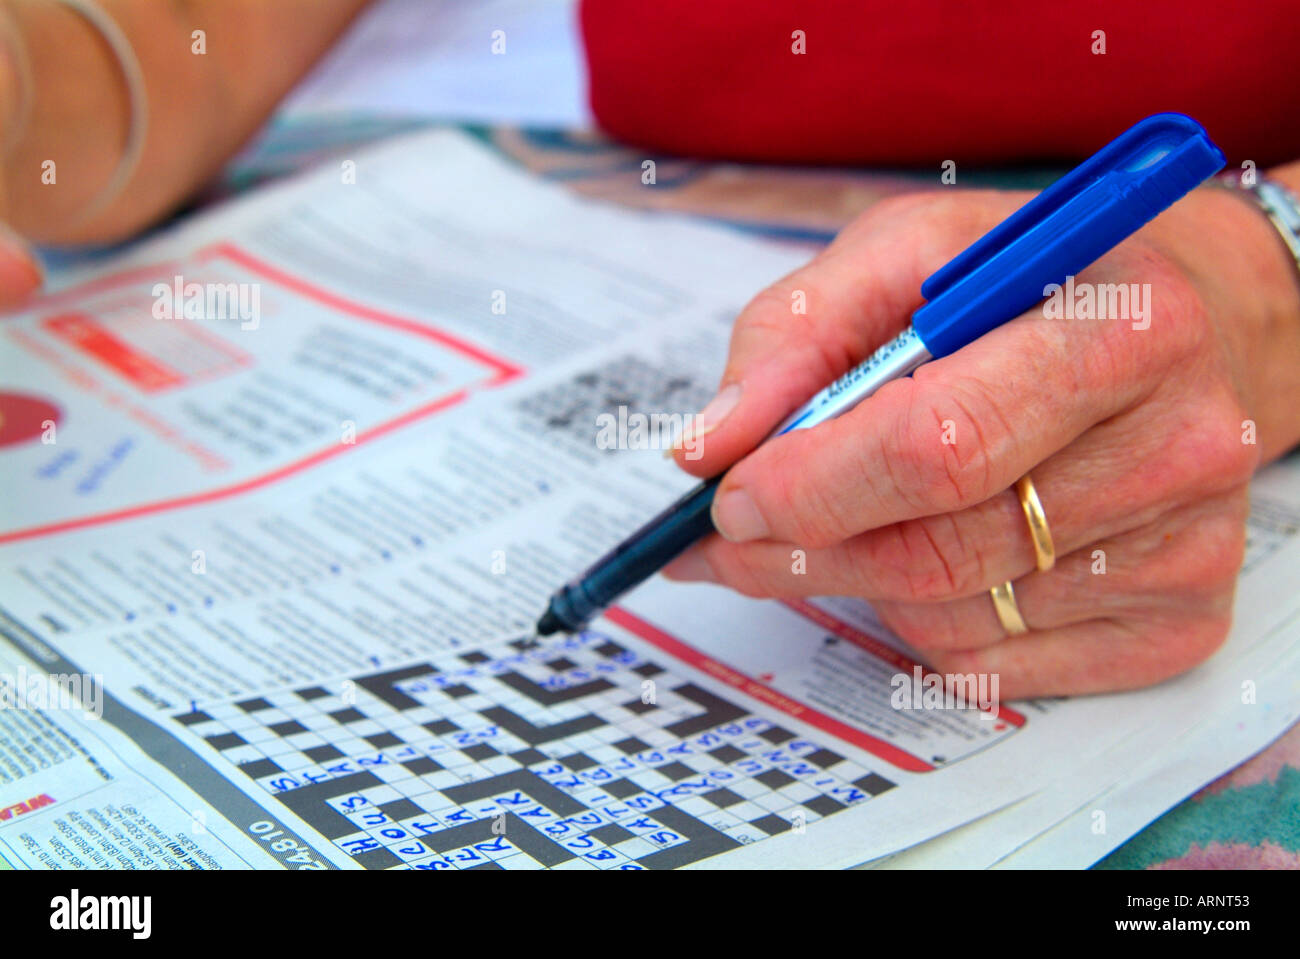 Woman doing crossword puzzle Stock Photo Alamy